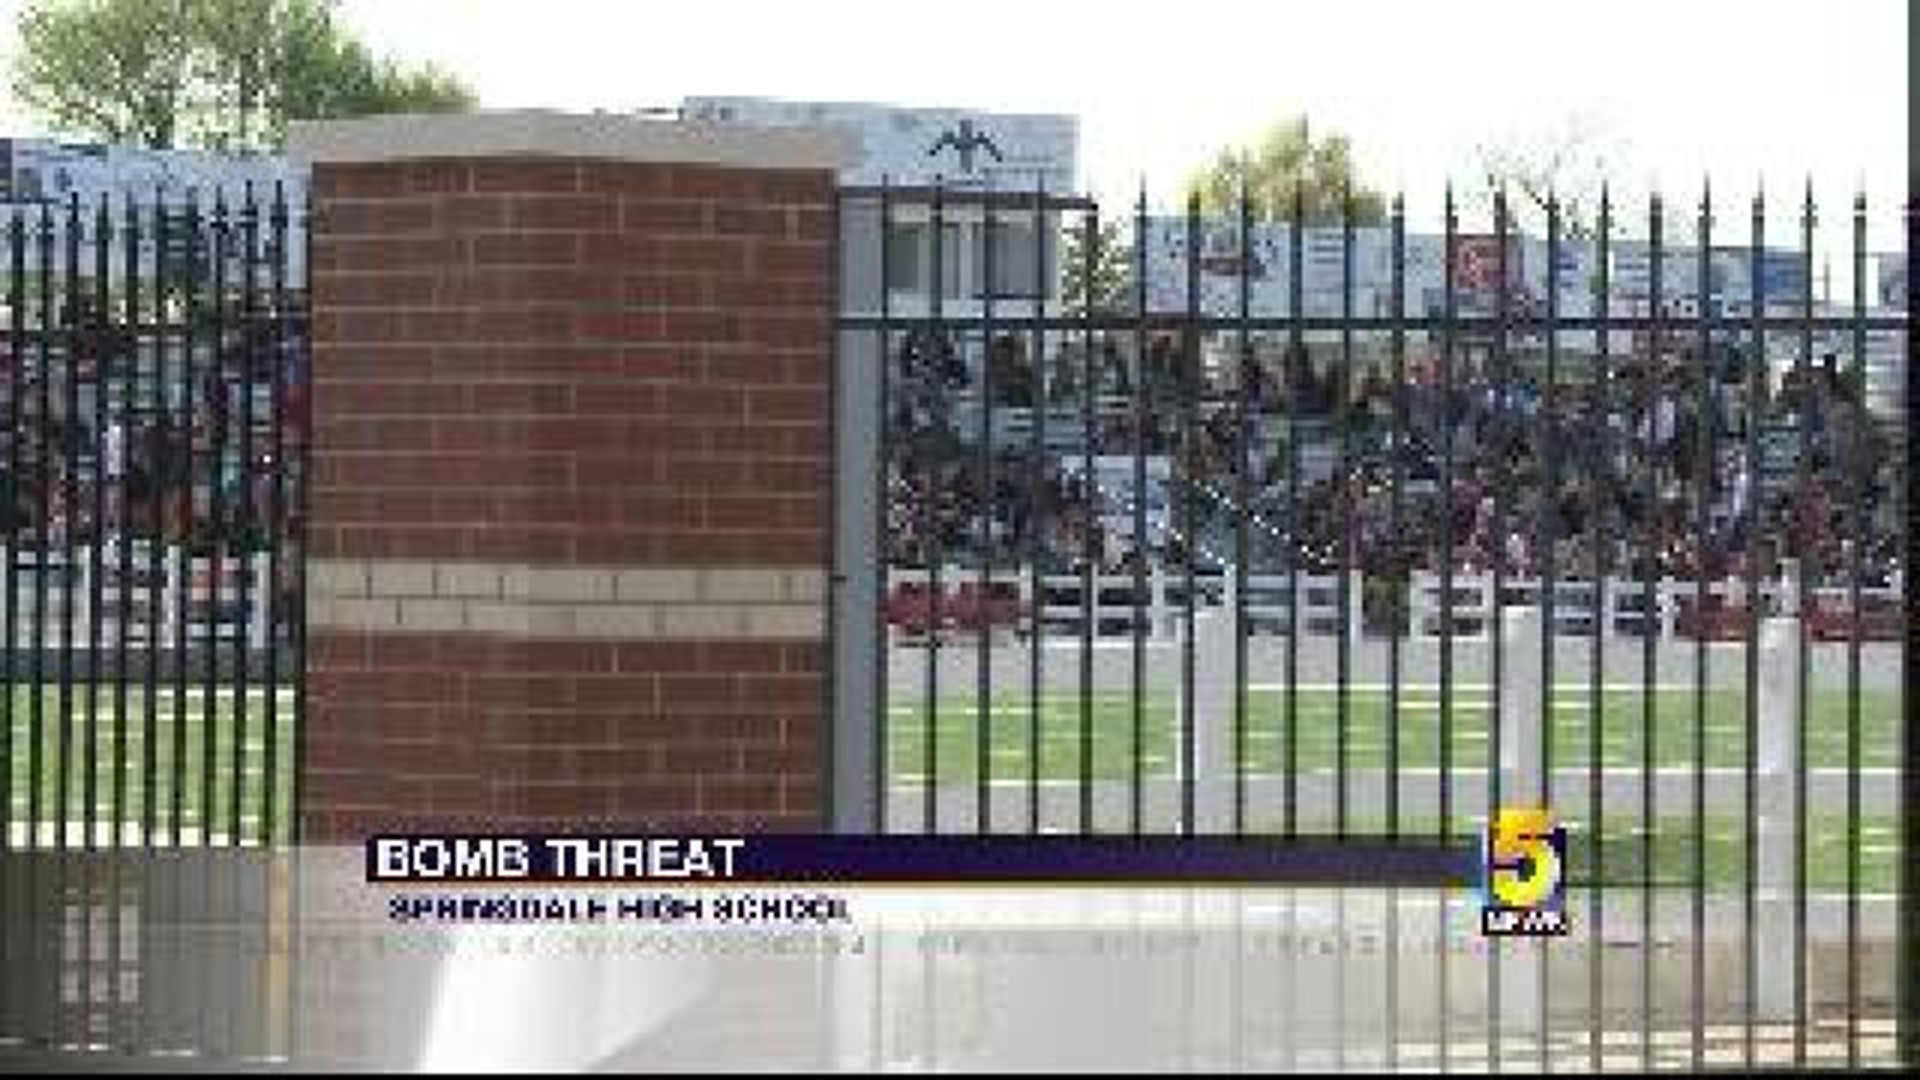 Bomb Threat at Springdale High School